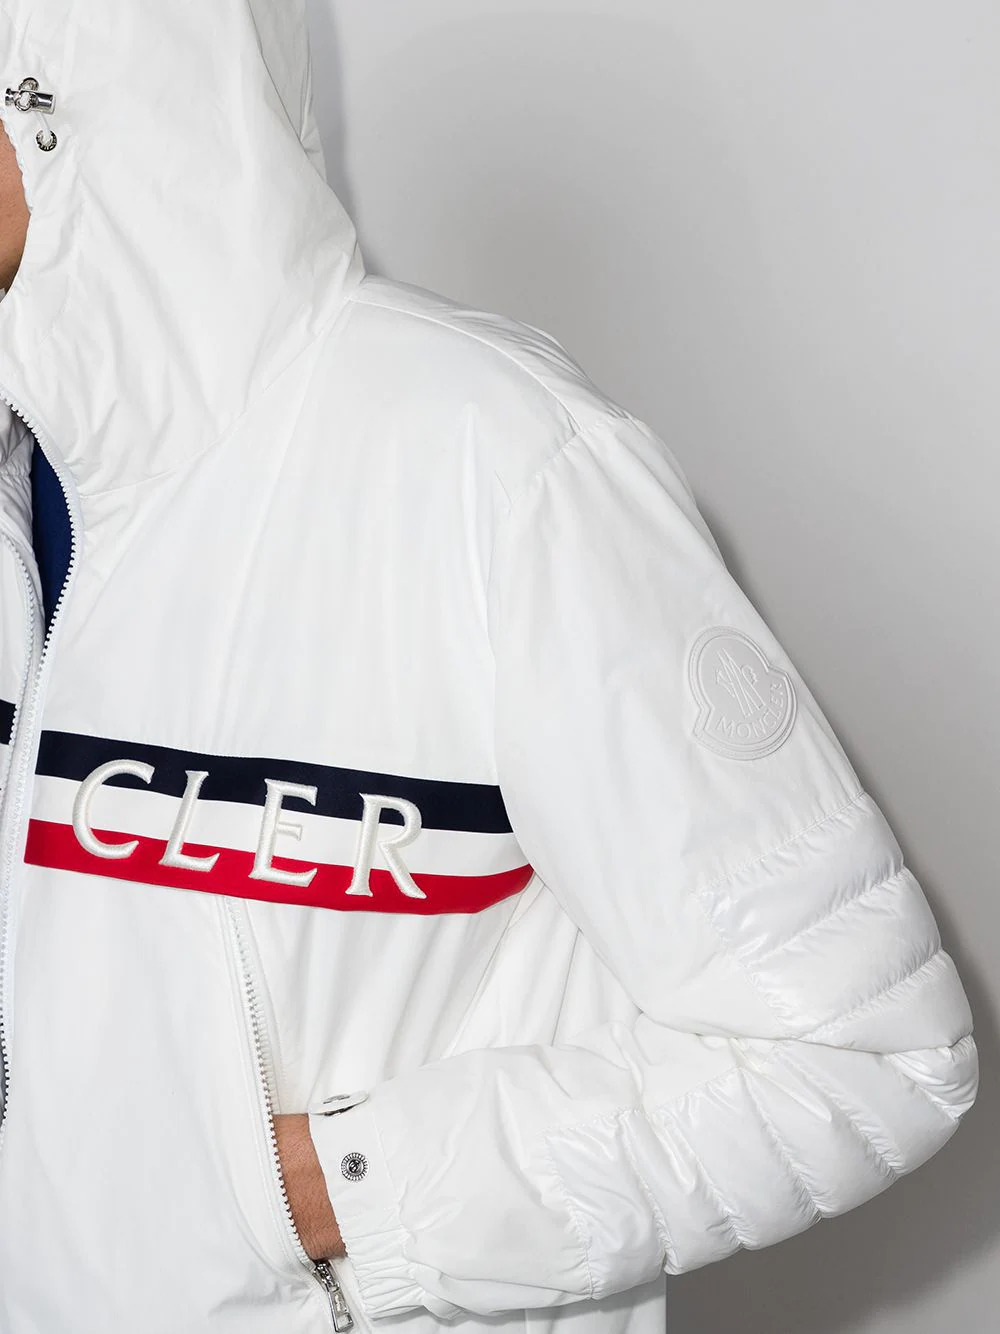 Moncler logo-print hooded jacket